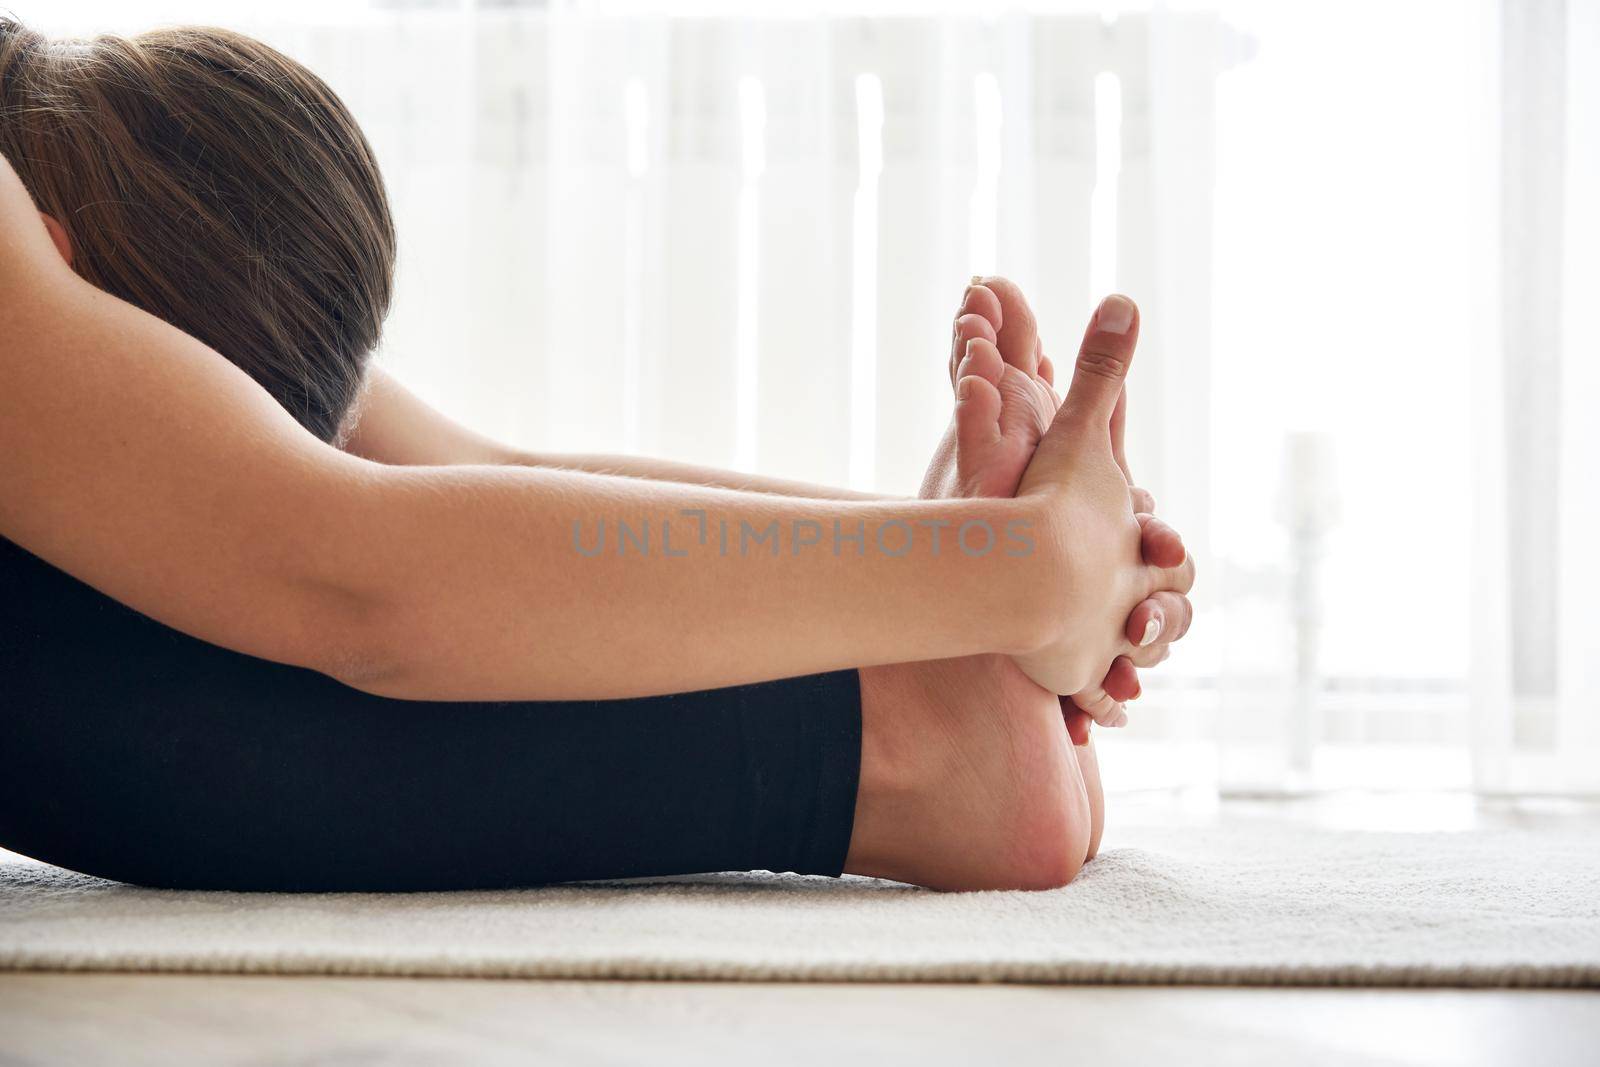 Yoga paschimottanasana forward bend pose by young woman. Young yogi practice yoga poses relaxing in studio